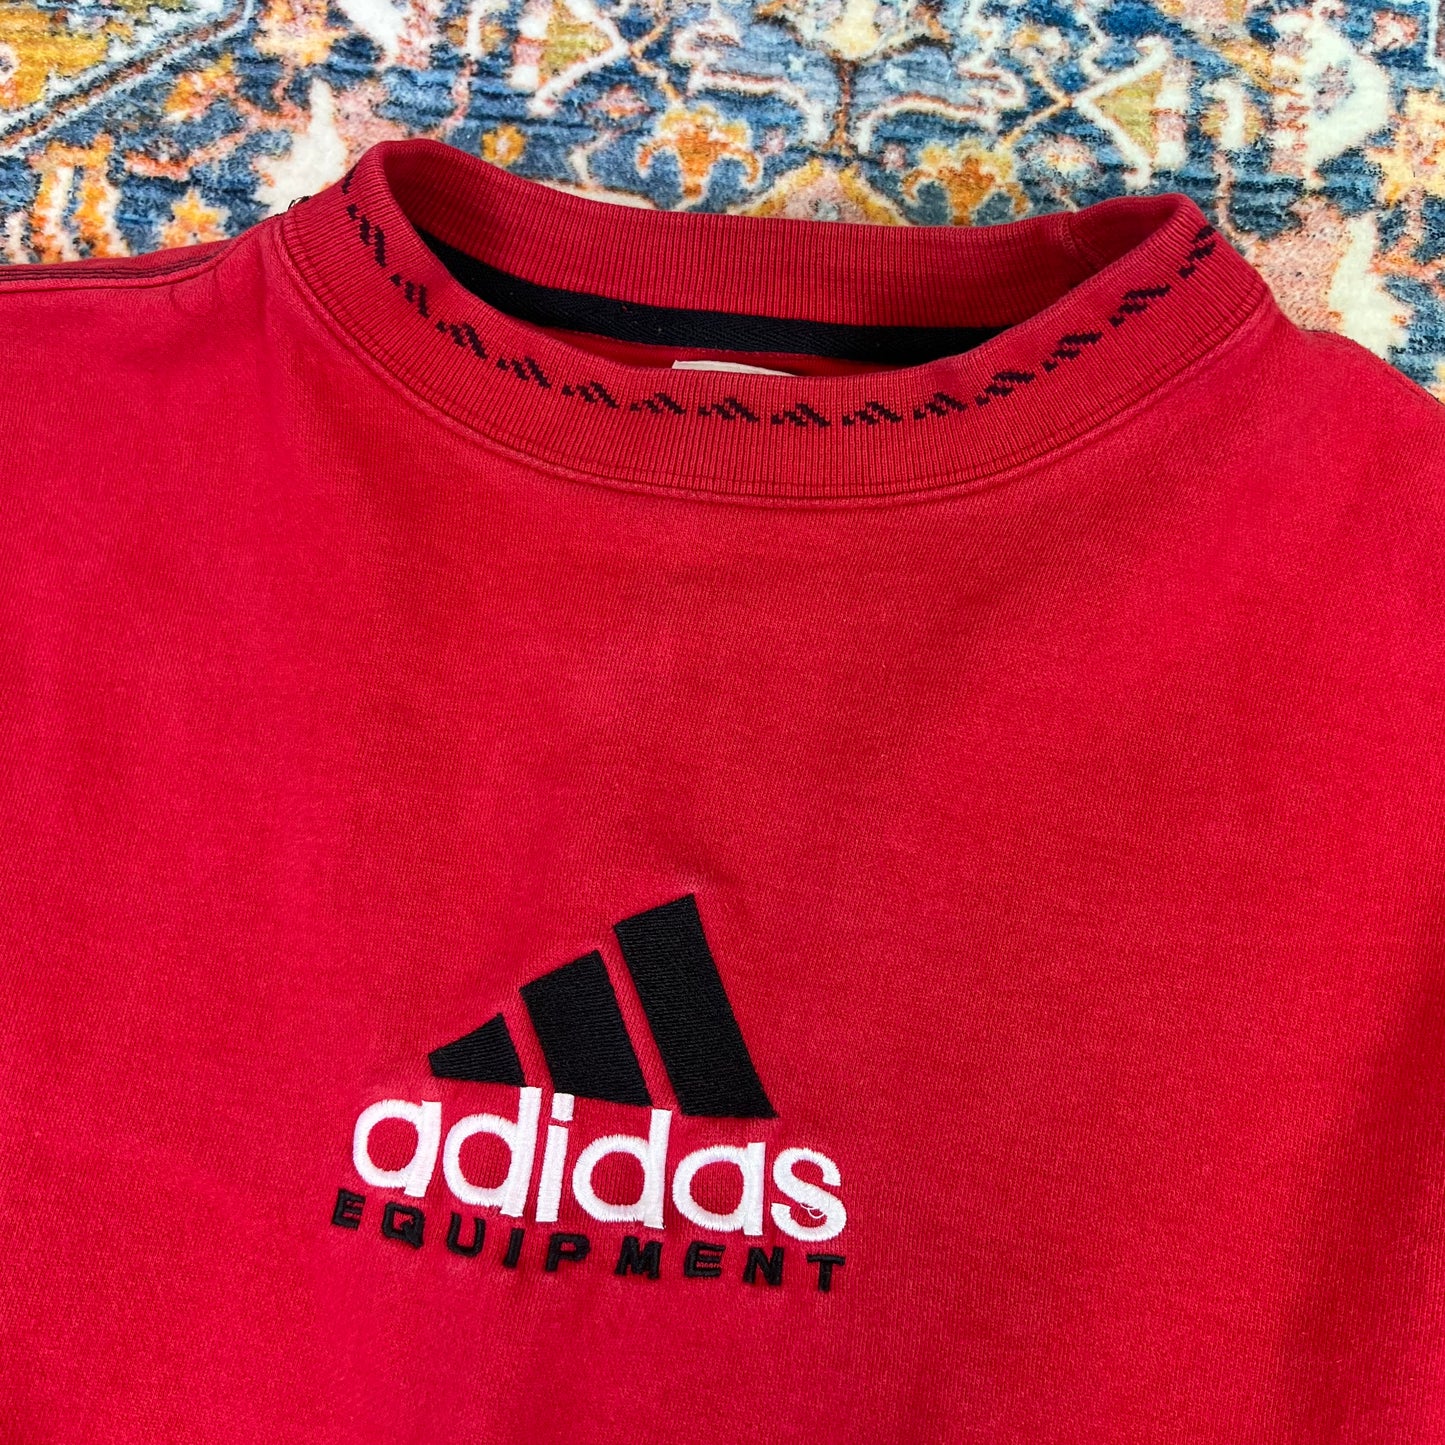 Vintage Adidas Equipment Sweatshirt (L)